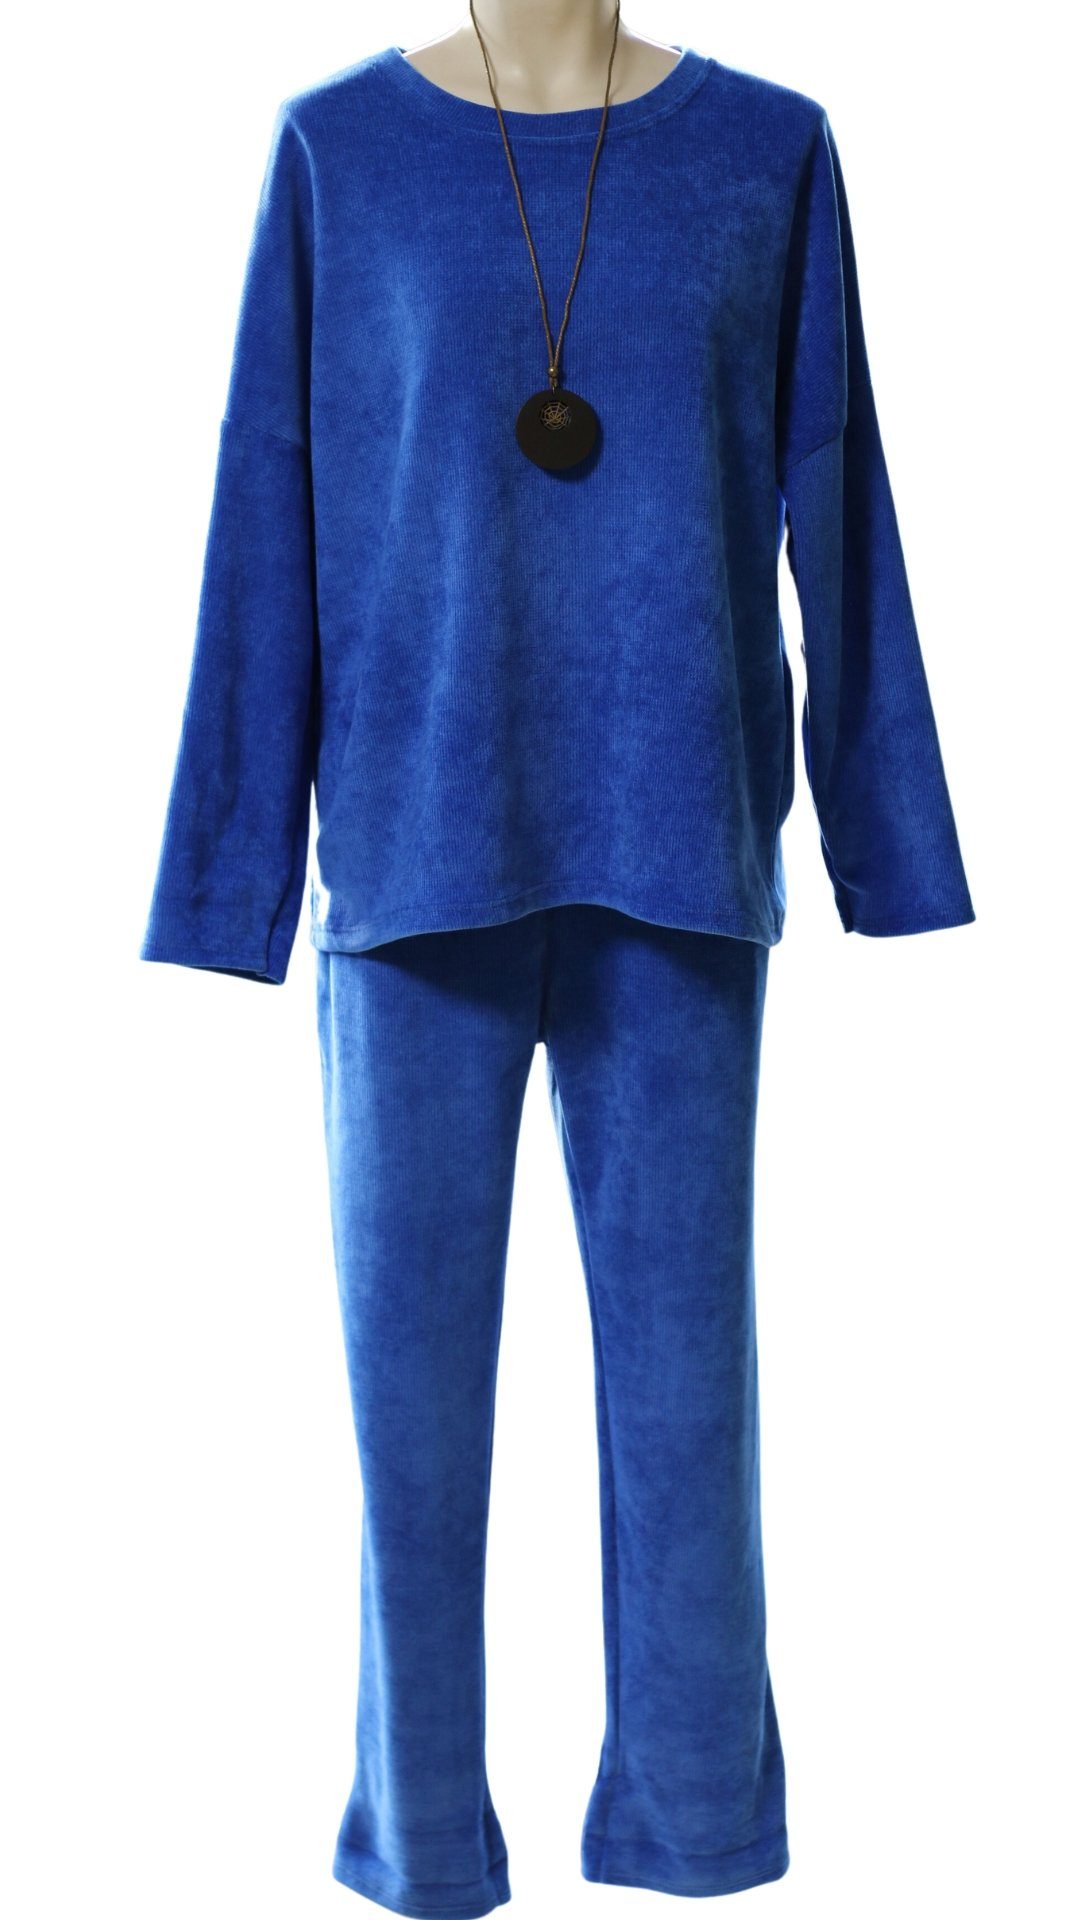 Charis Moda zweiteiliger Hausanzug Hausanzug Royalblau Set Outfit Chilltime Loungewear